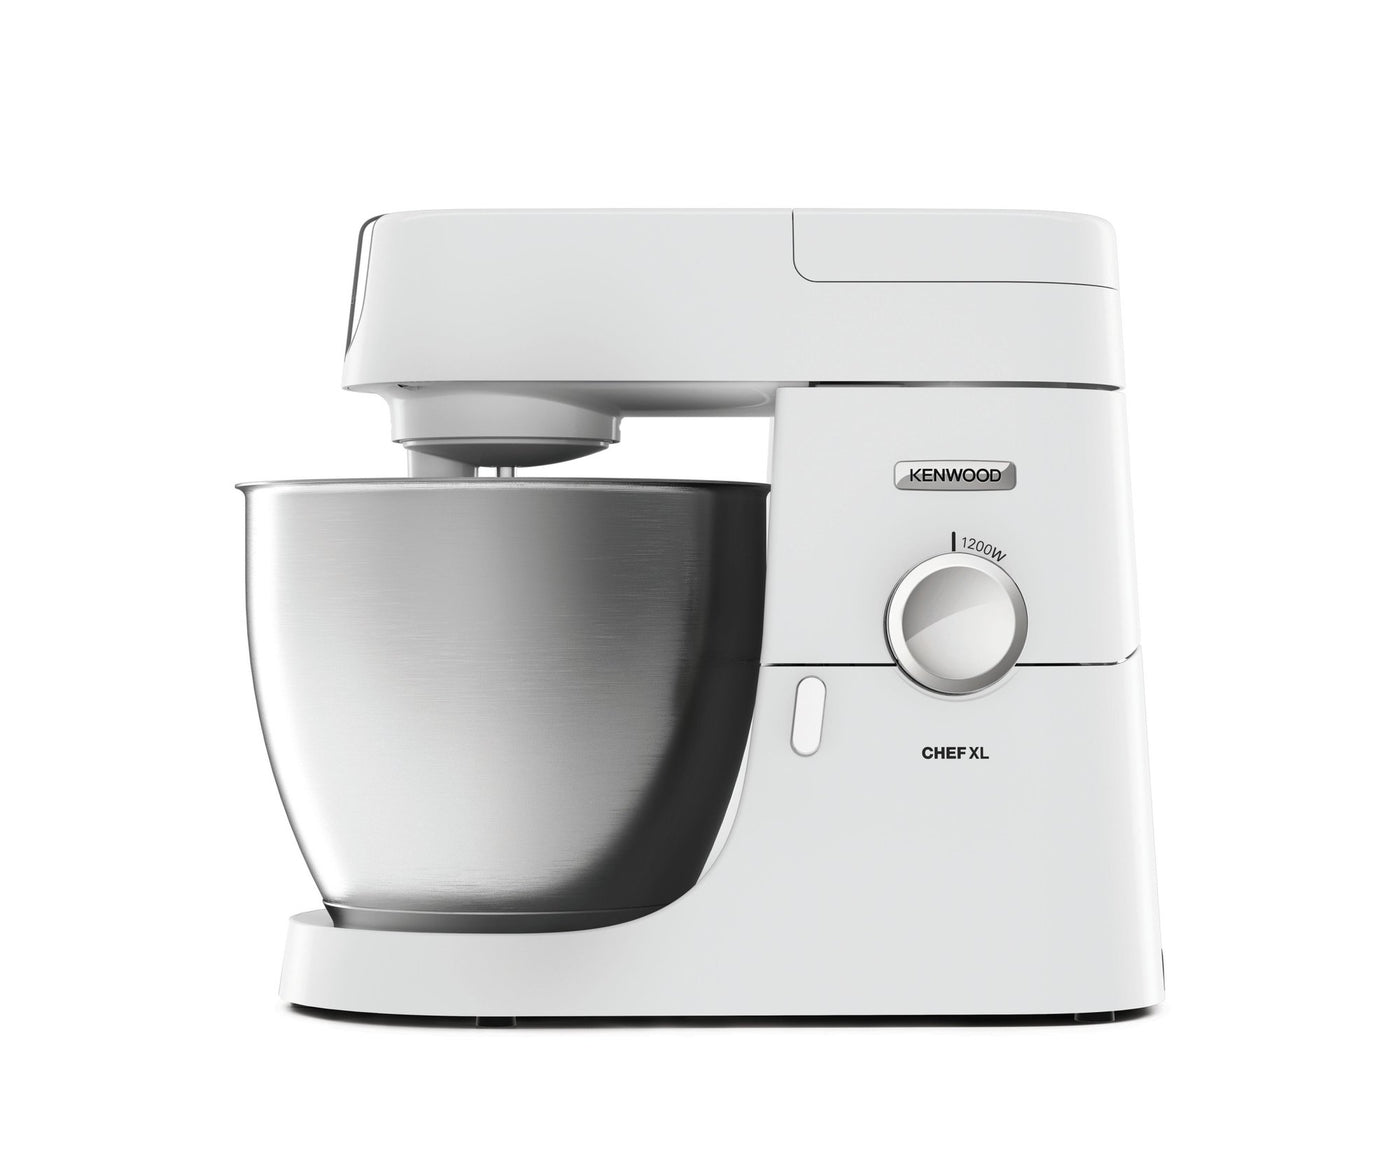 Kenwood - Køkkenmaskine KVL4101W 1200W - Inkl. ekstra skål